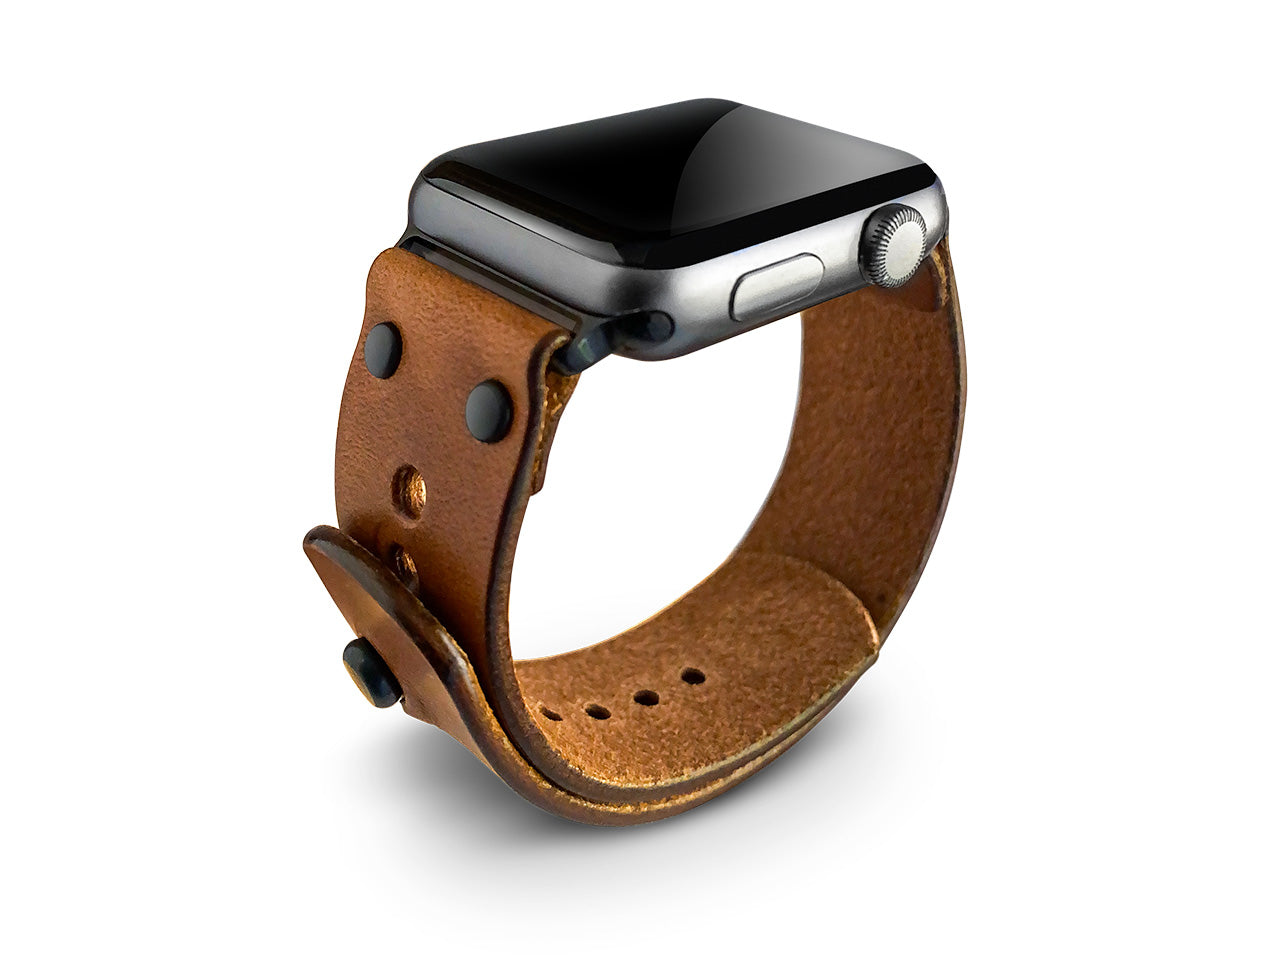 Watch Bracelet Leather Brand New Watch Strap for Apple Watch